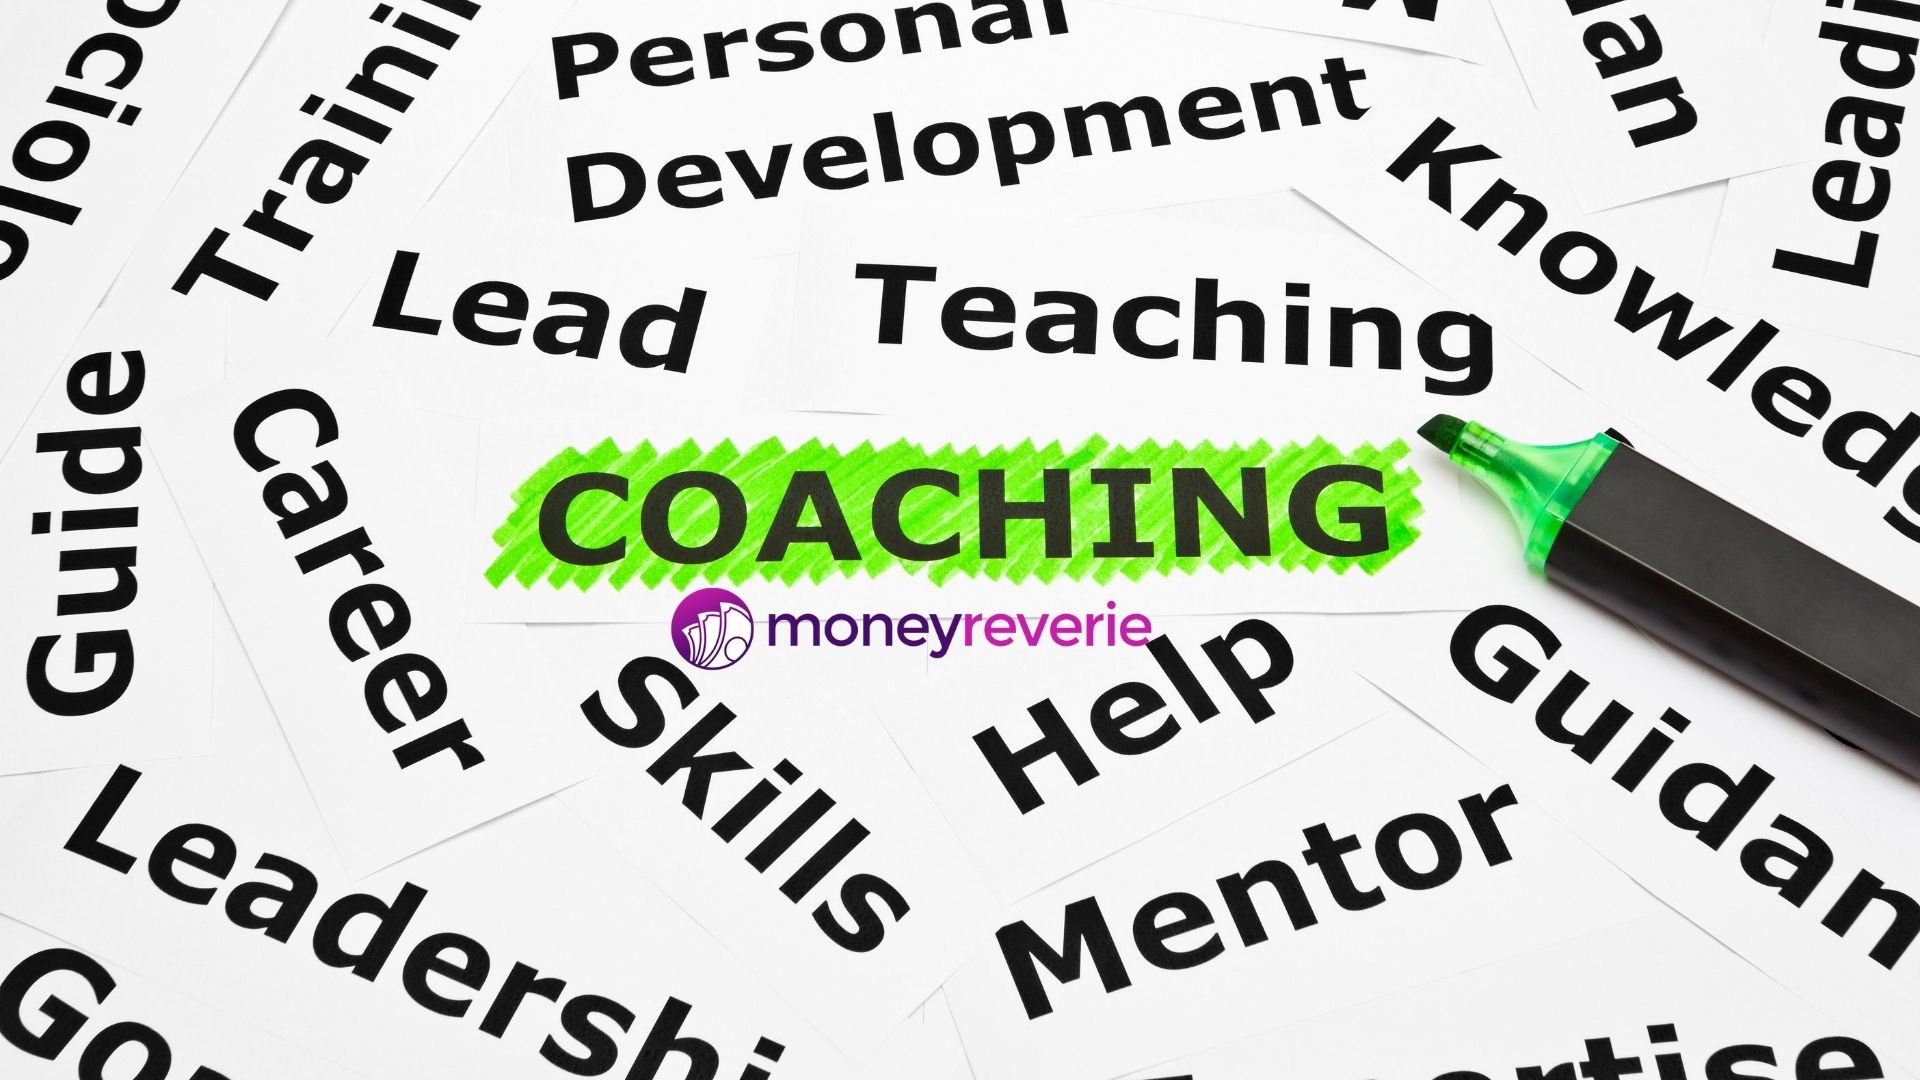 Coach Others-make passive income